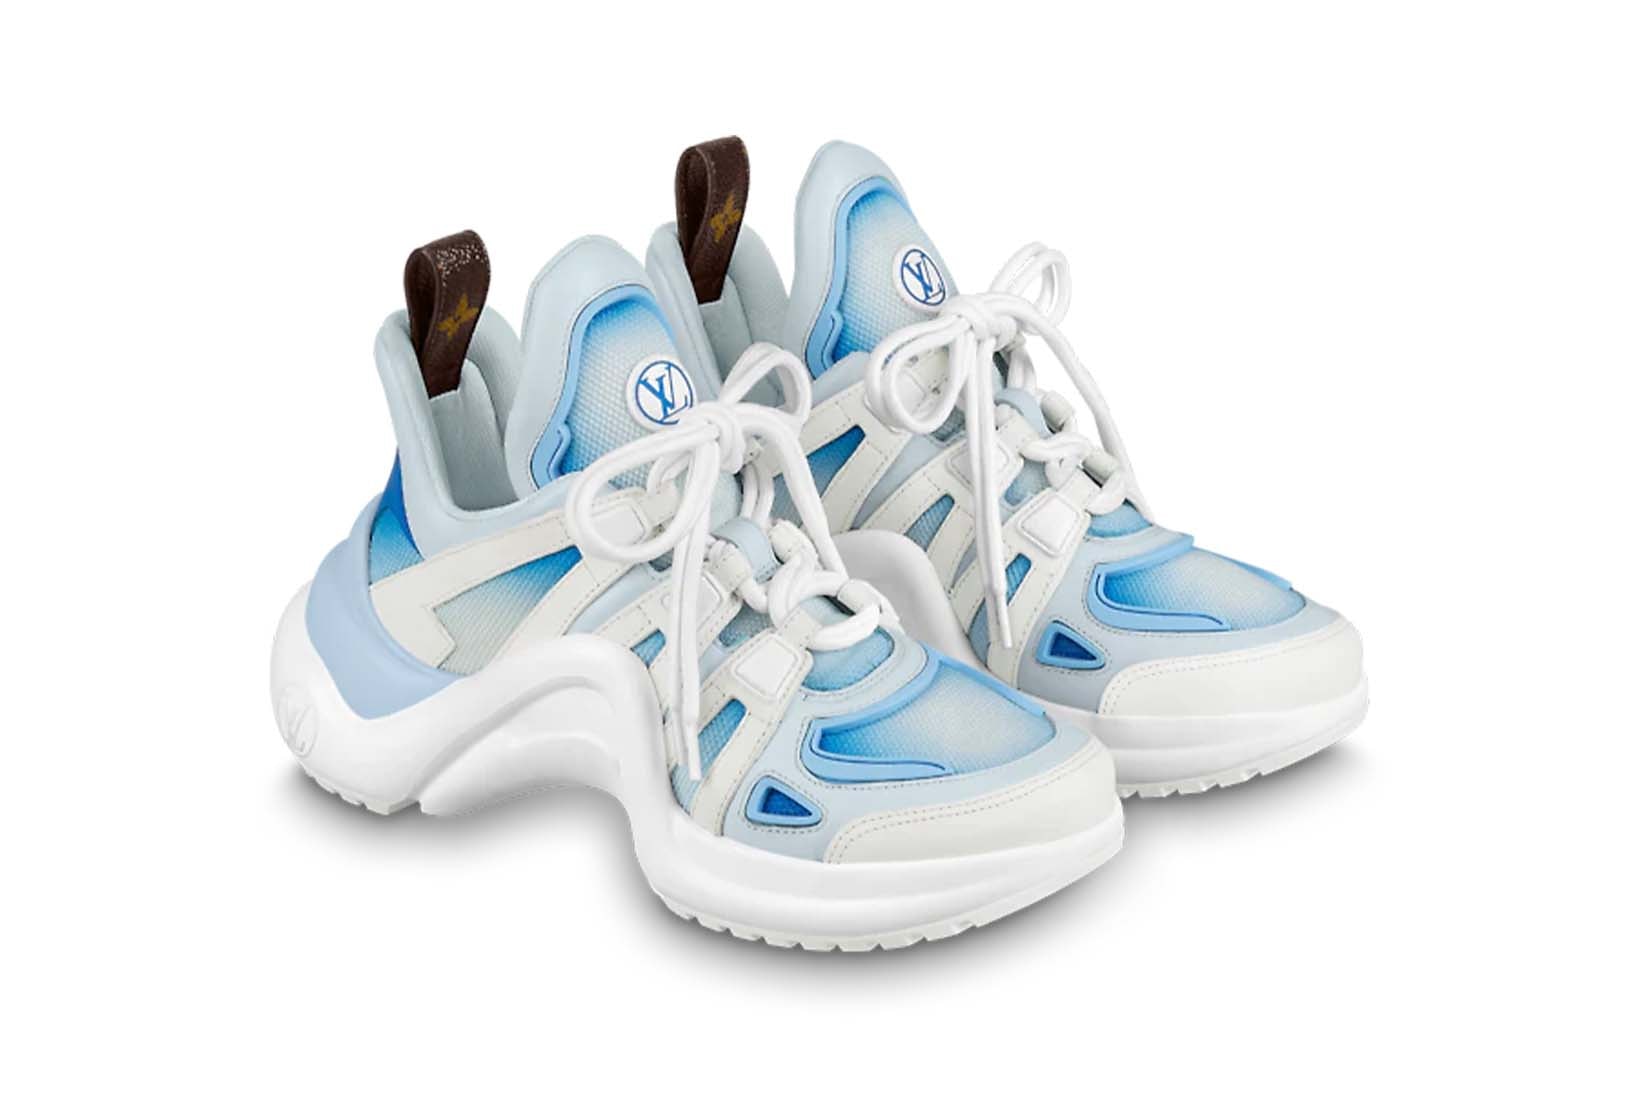 Louis Vuitton Archlight Sneaker Light Blue Price